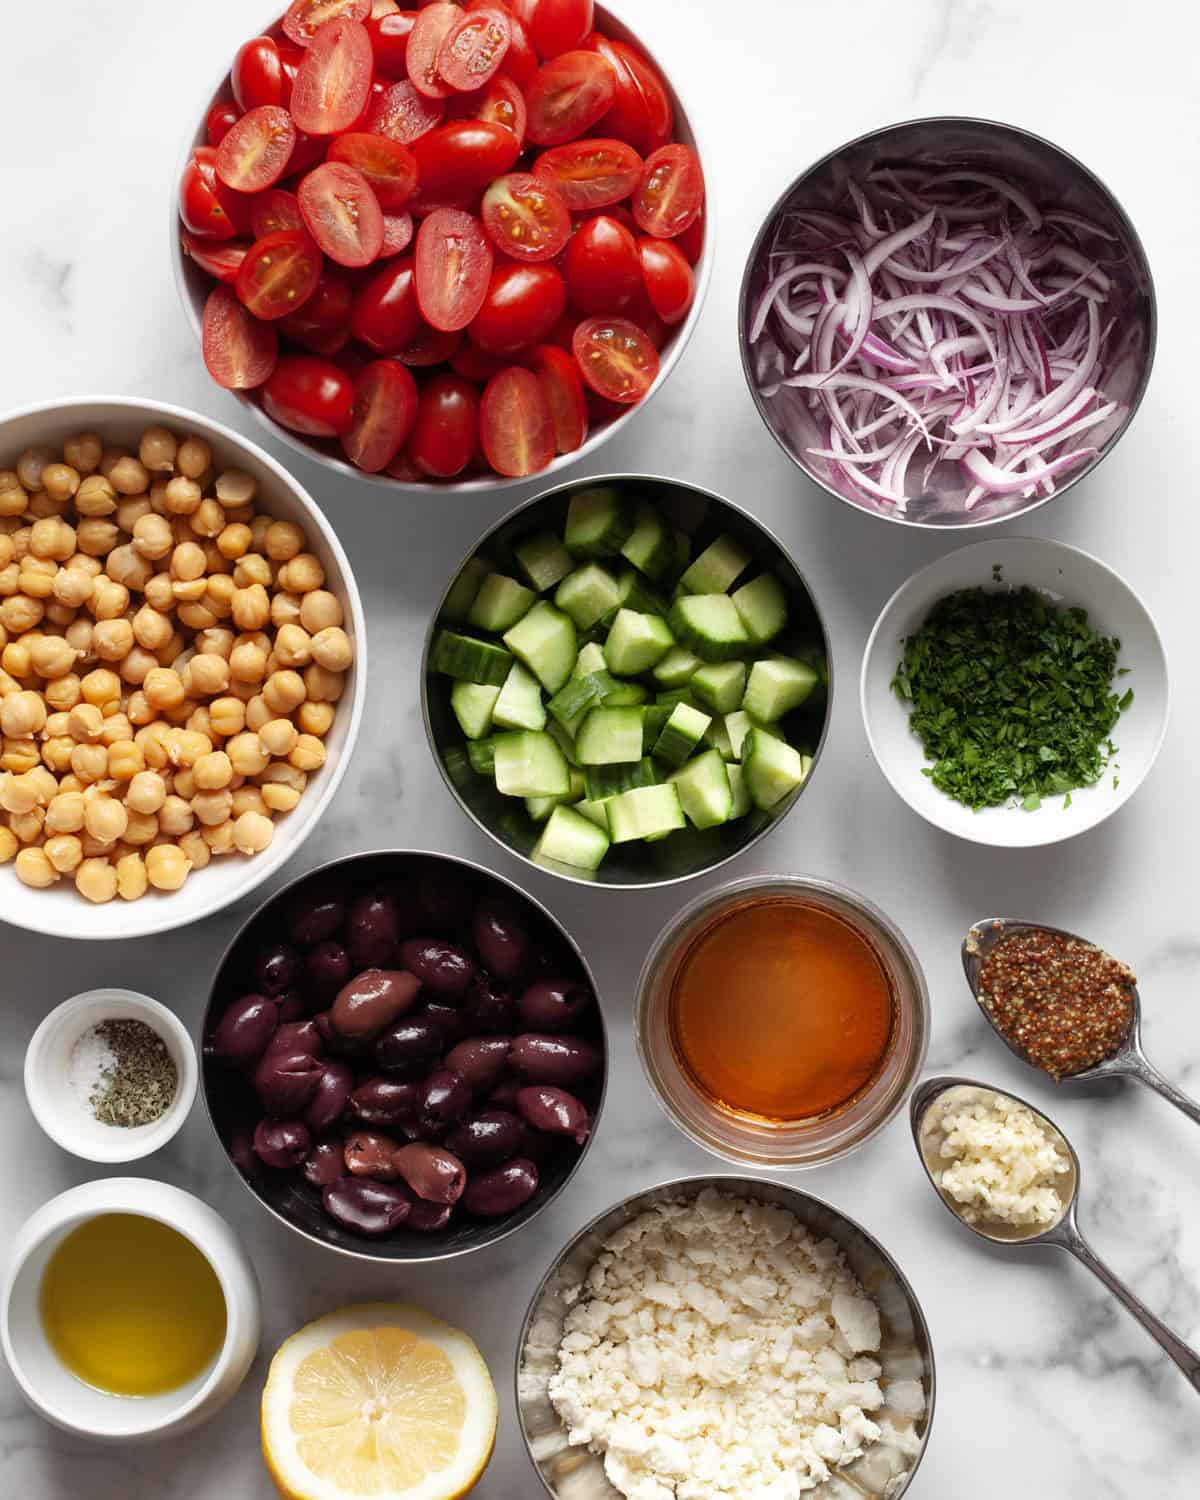 Ingredients including tomatoes, cucumbers, olives, chickpeas, feta, red onions, oil, vinegar, garlic and seasonings.